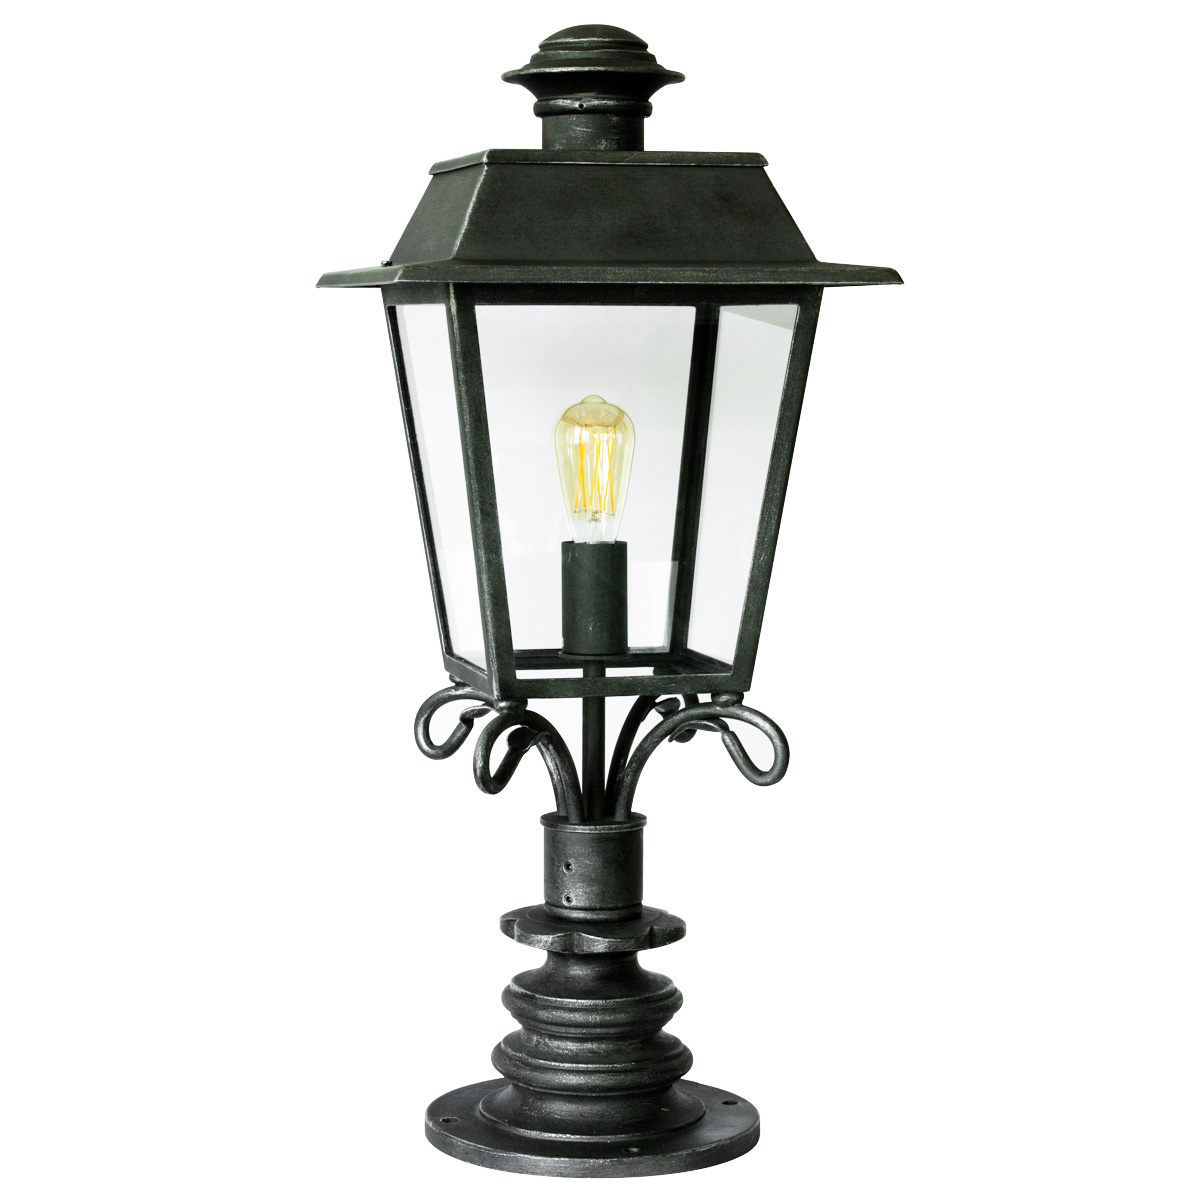 Classic Wrought Iron Pedestal Lantern AL 6796